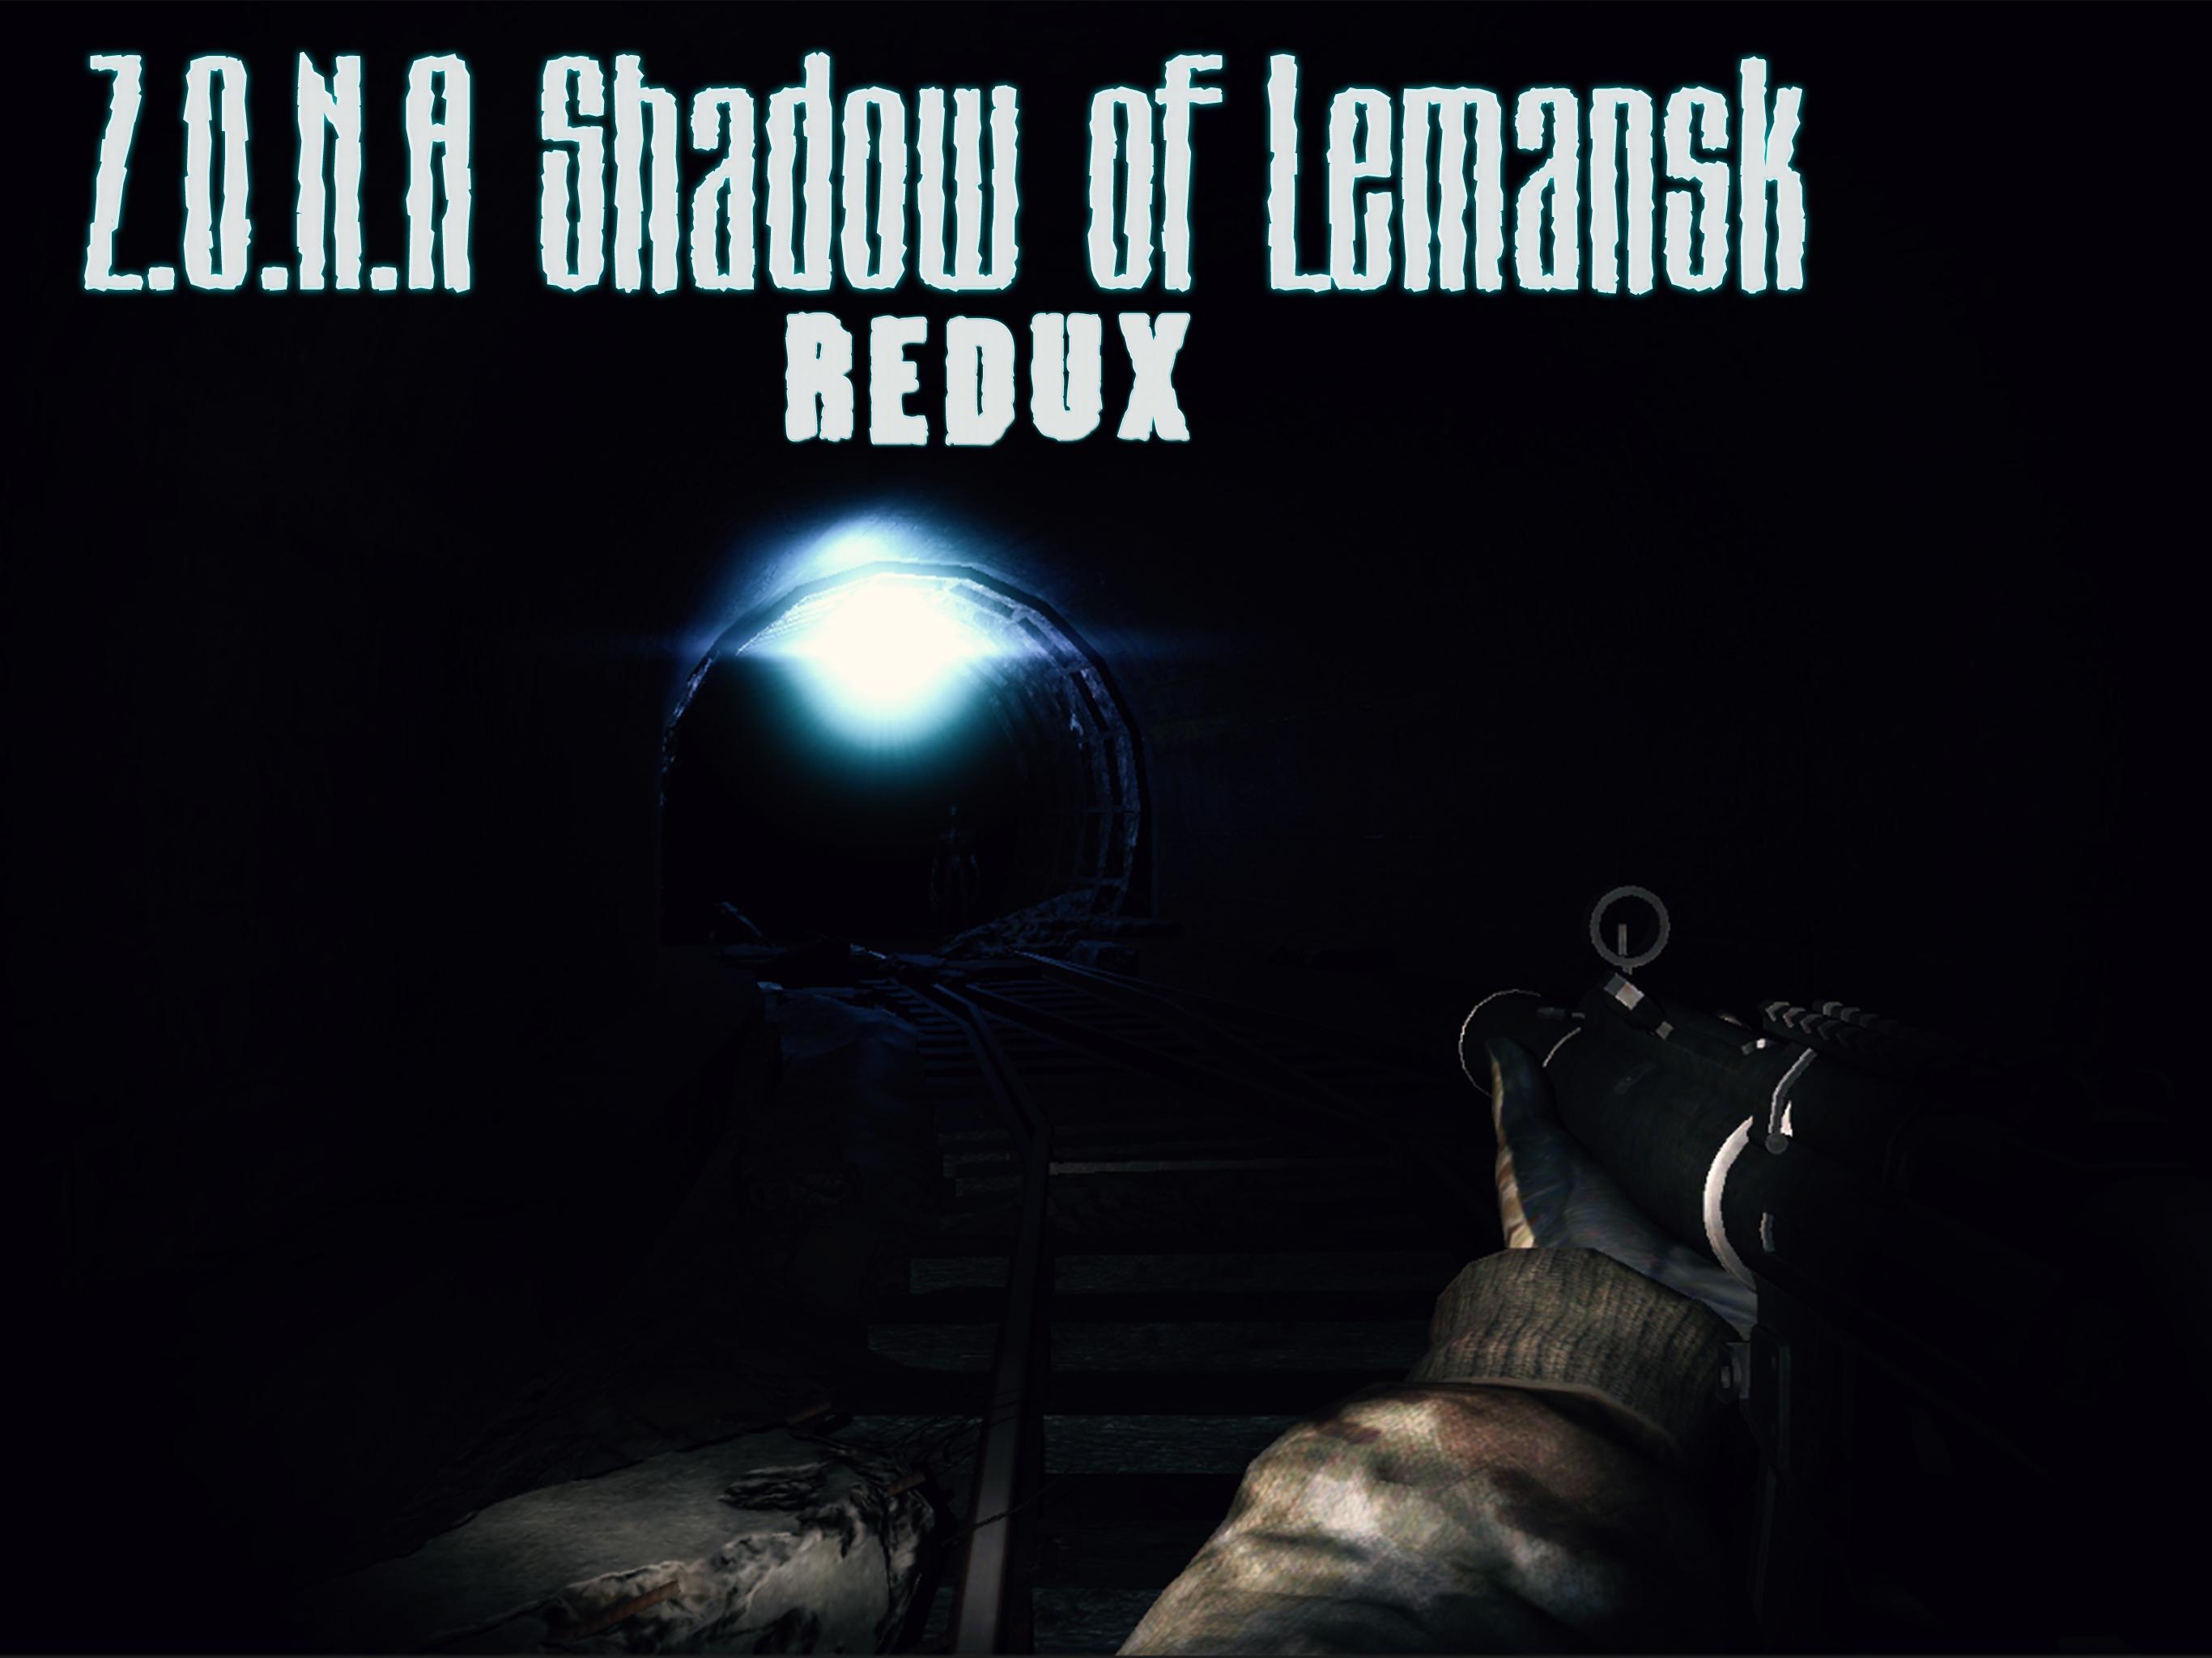 Shadow of lemansk redux. Игра zona Shadow of Lemansk. Z.O.N.A Shadow of Limansk Redux. Z.O.N.A Shadow of Lemansk: постапокалипсис шутер. Тень Лиманска игра на андроид.